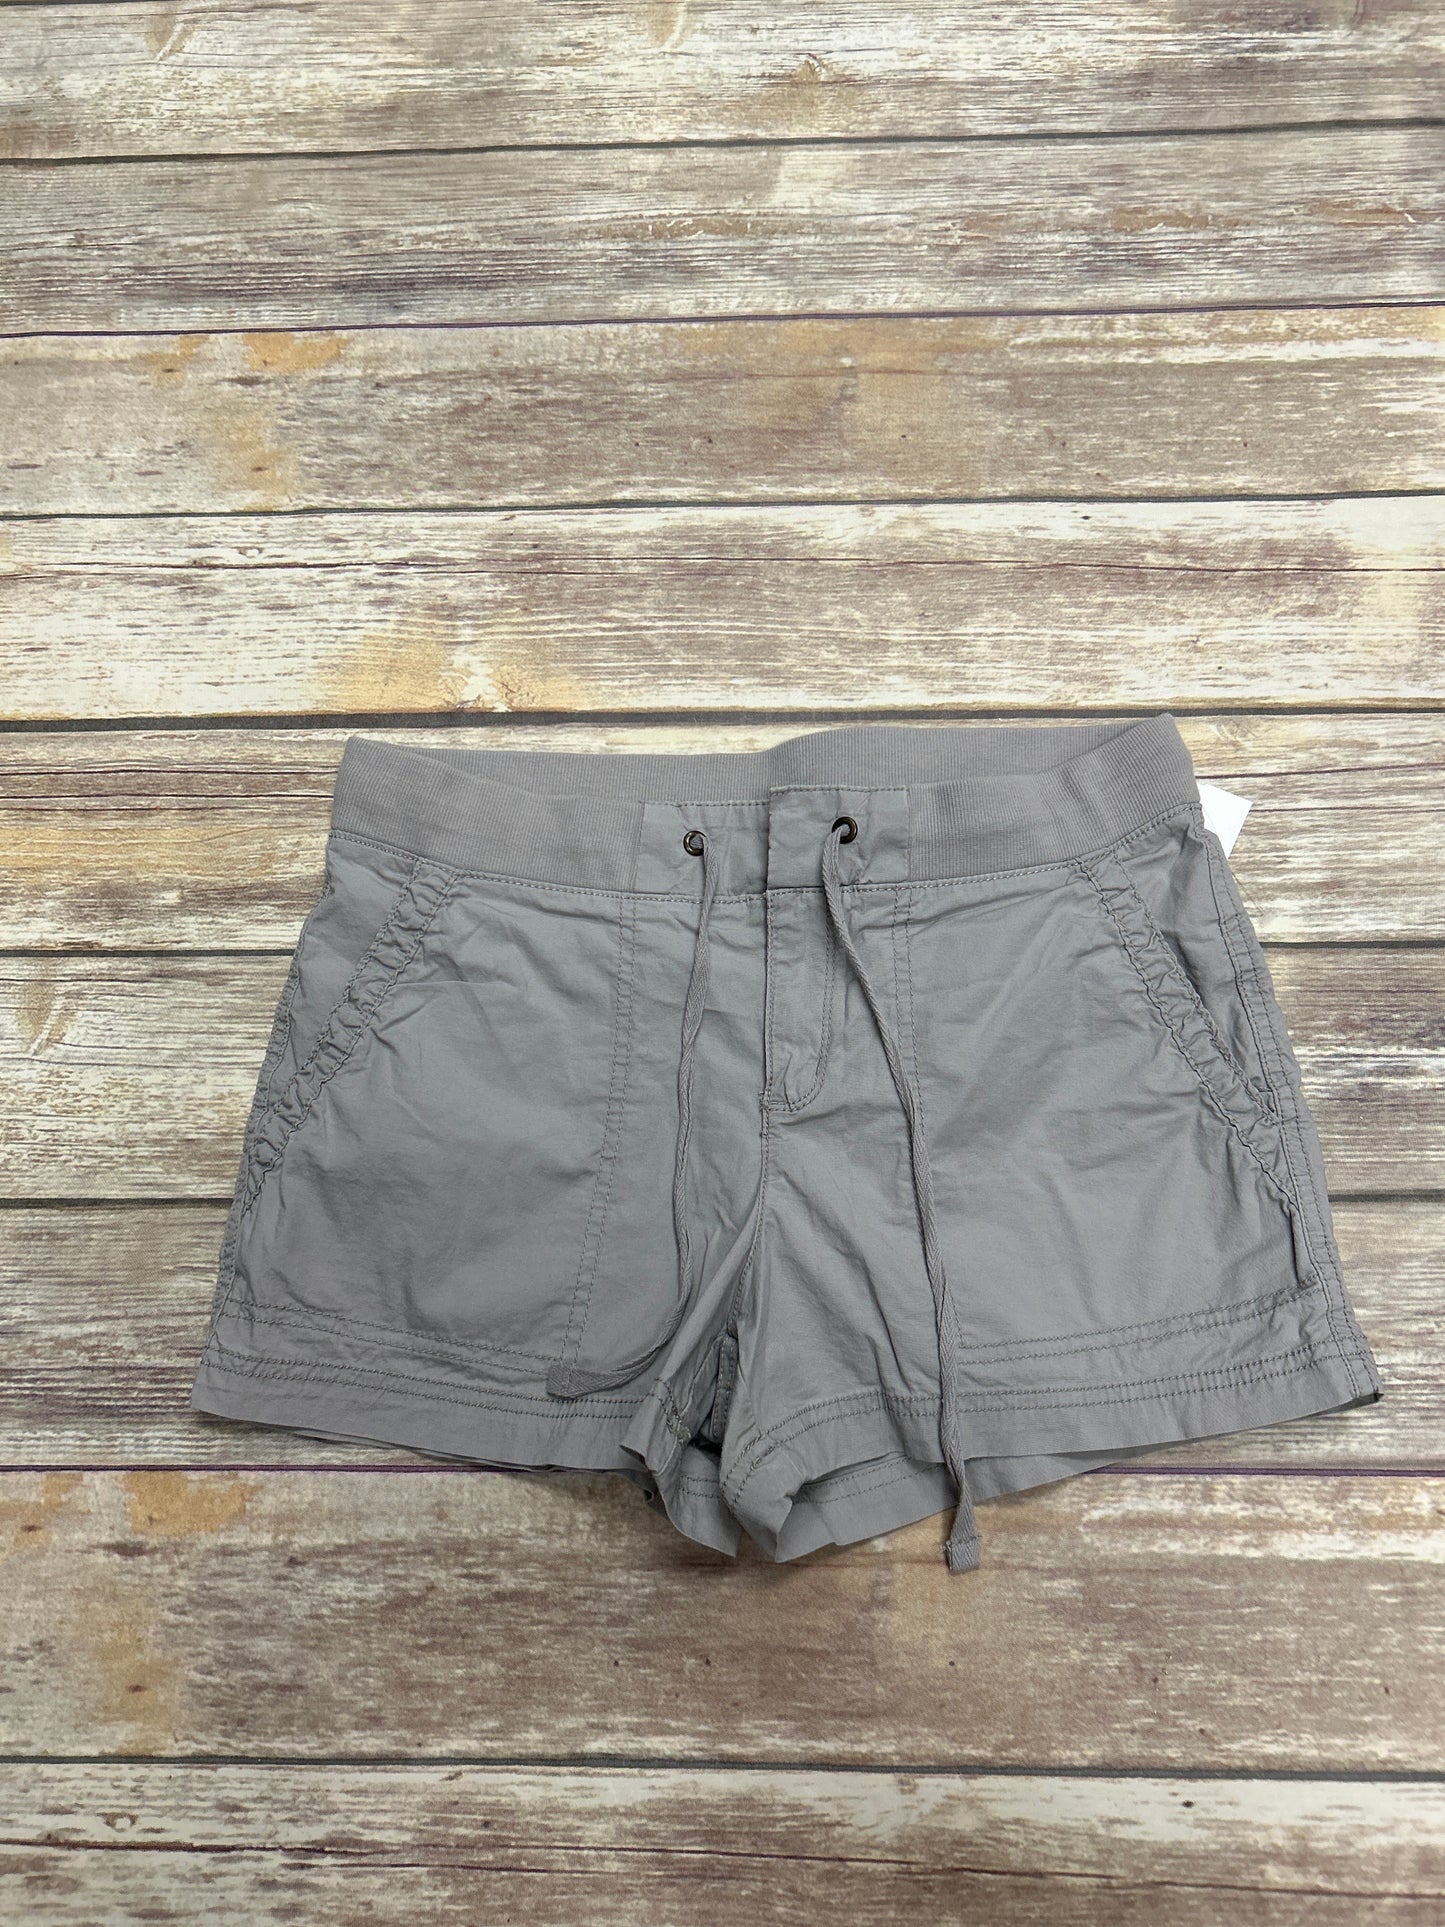 Grey Shorts Ana, Size 4